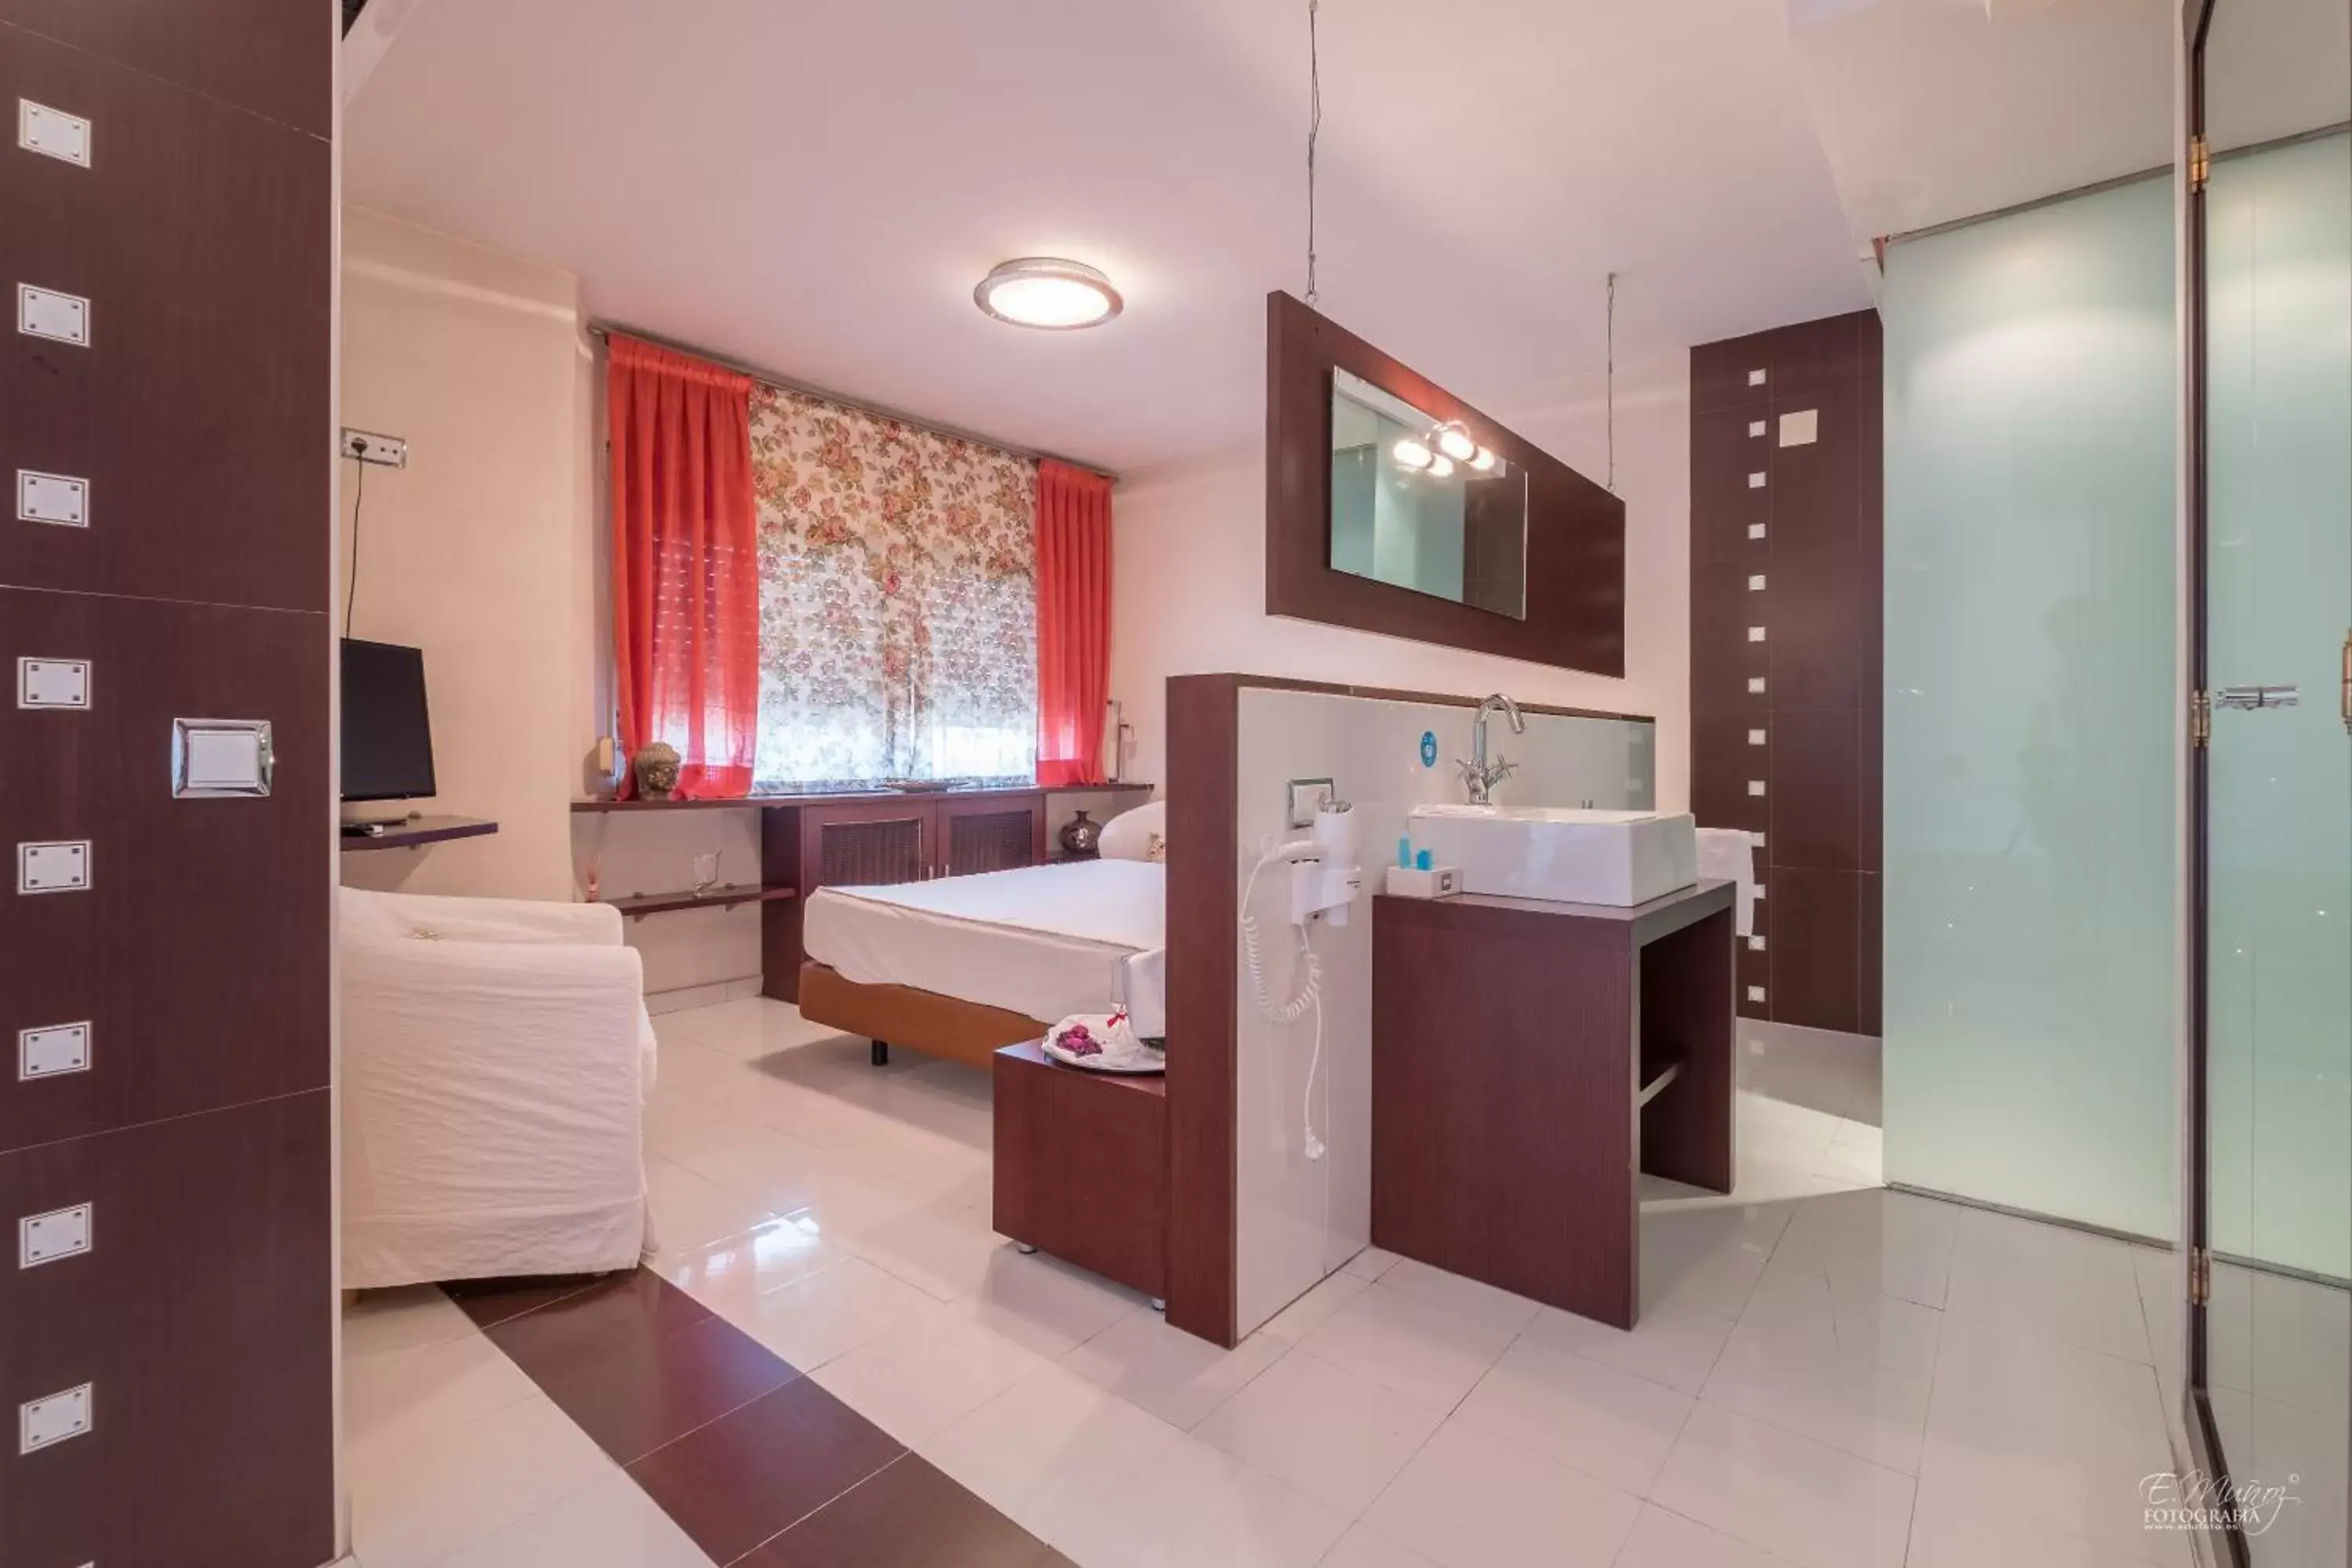 Photo of the whole room, Bathroom in Hotel Vivar